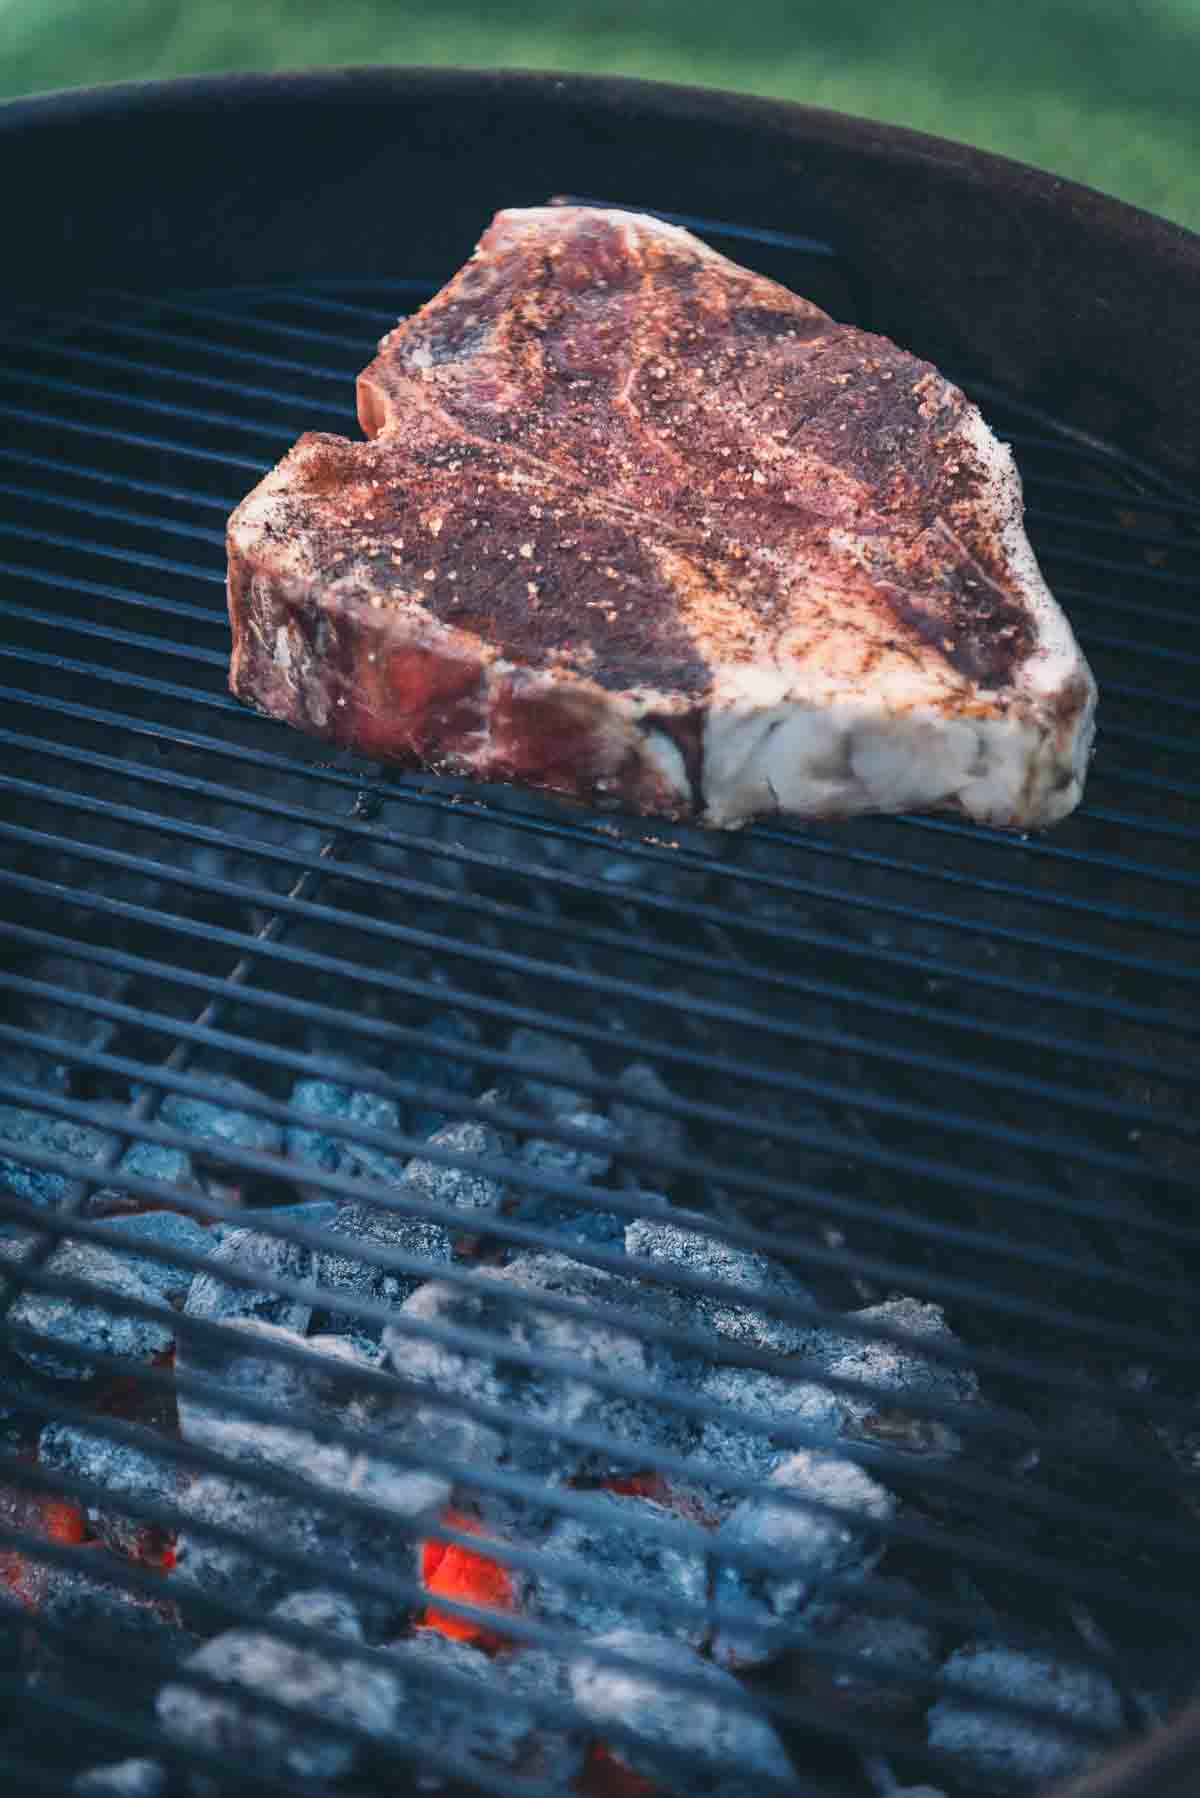 Porterhouse steak on a charcoal grill.